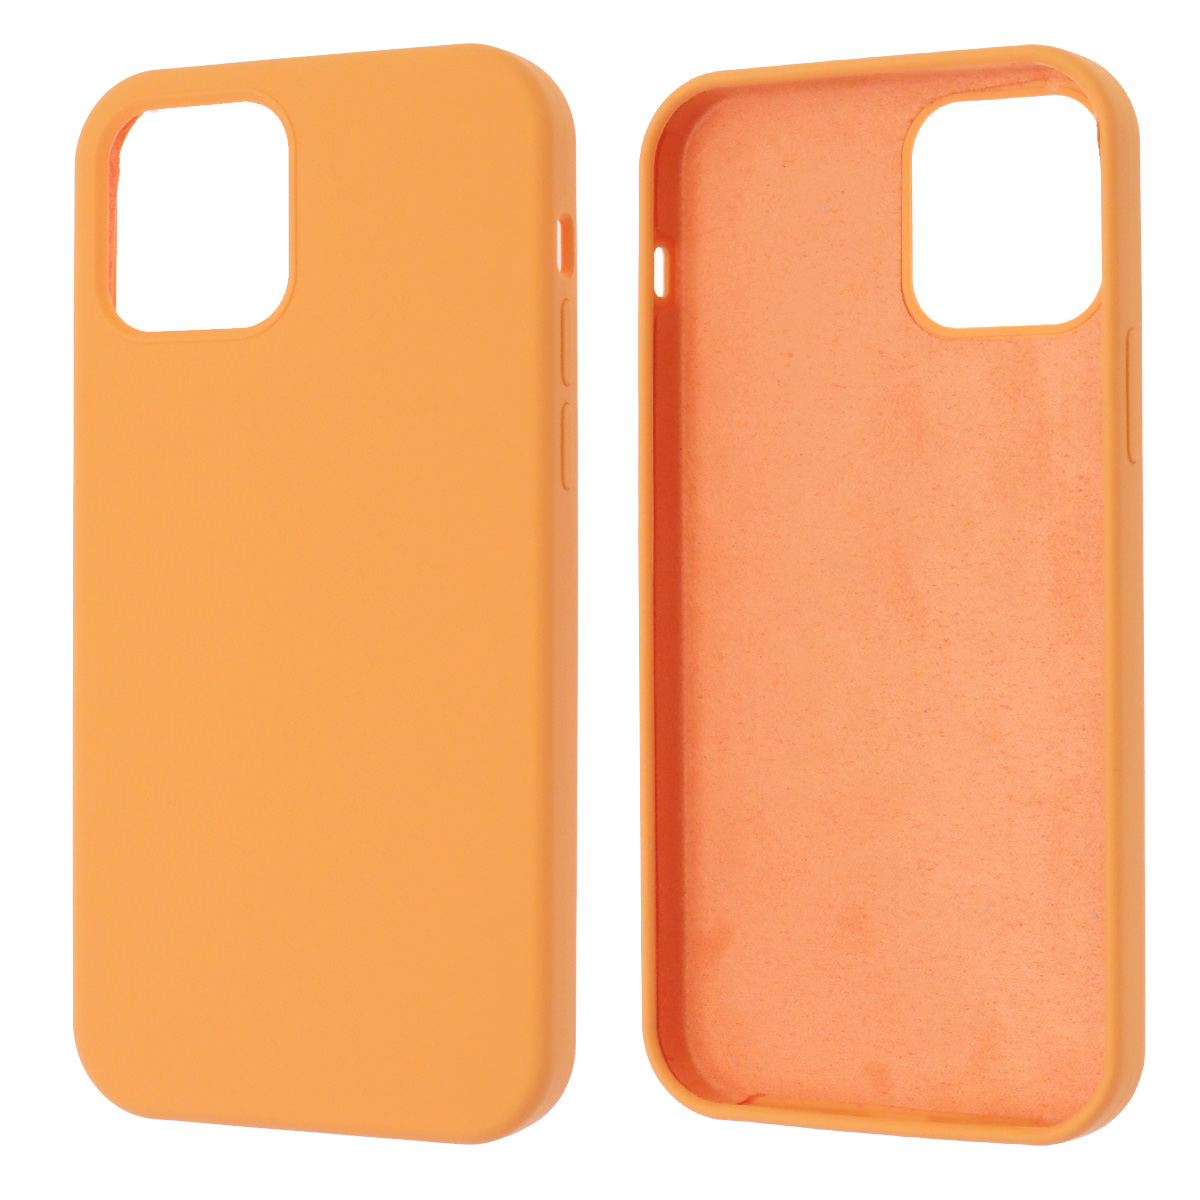 Чехол накладка Silicon Case для APPLE iPhone 12, iPhone 12 Pro, силикон, бархат, цвет папайя